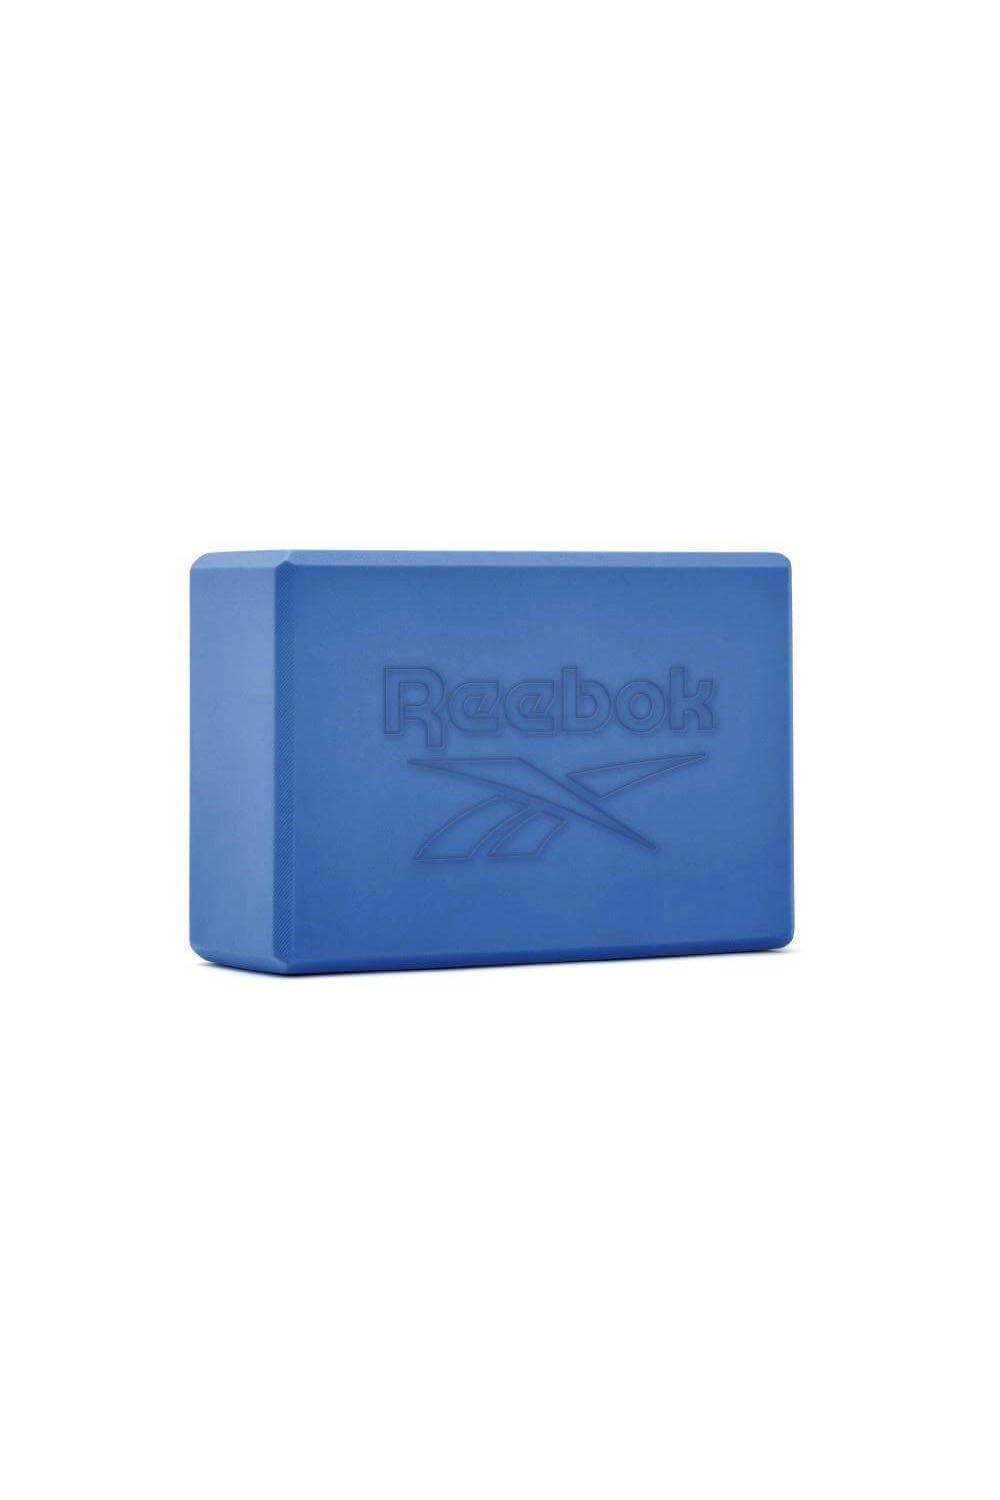 Reebok Yoga Block|blue